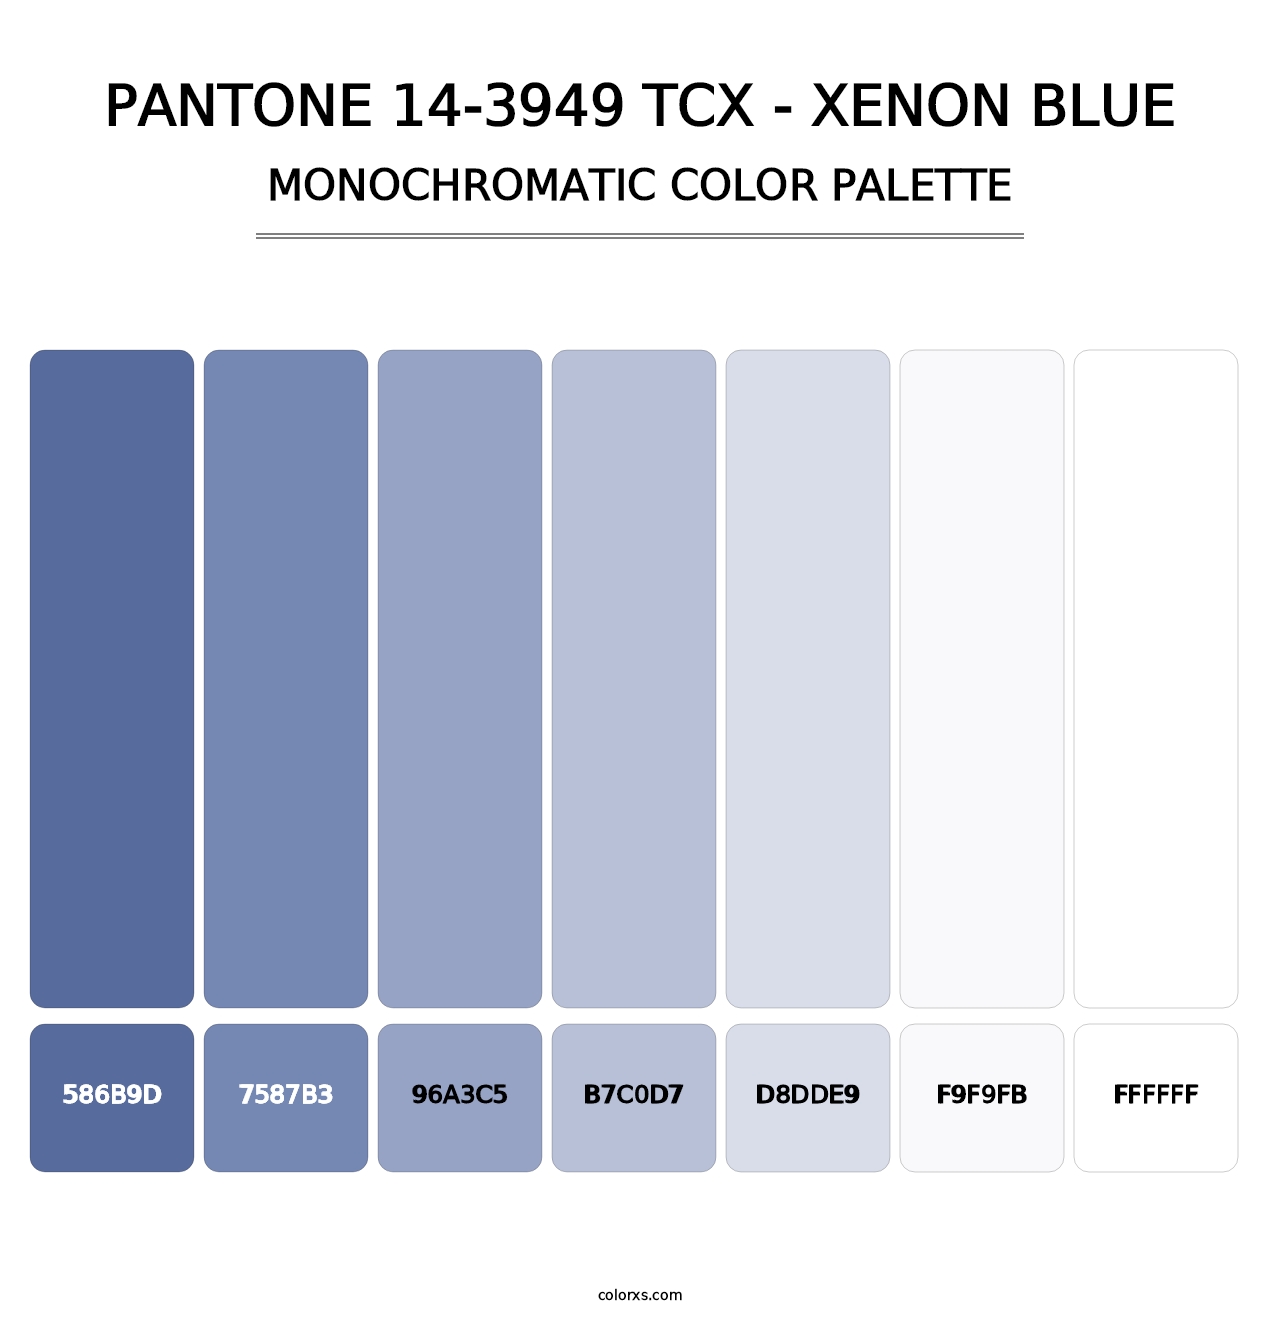 PANTONE 14-3949 TCX - Xenon Blue - Monochromatic Color Palette